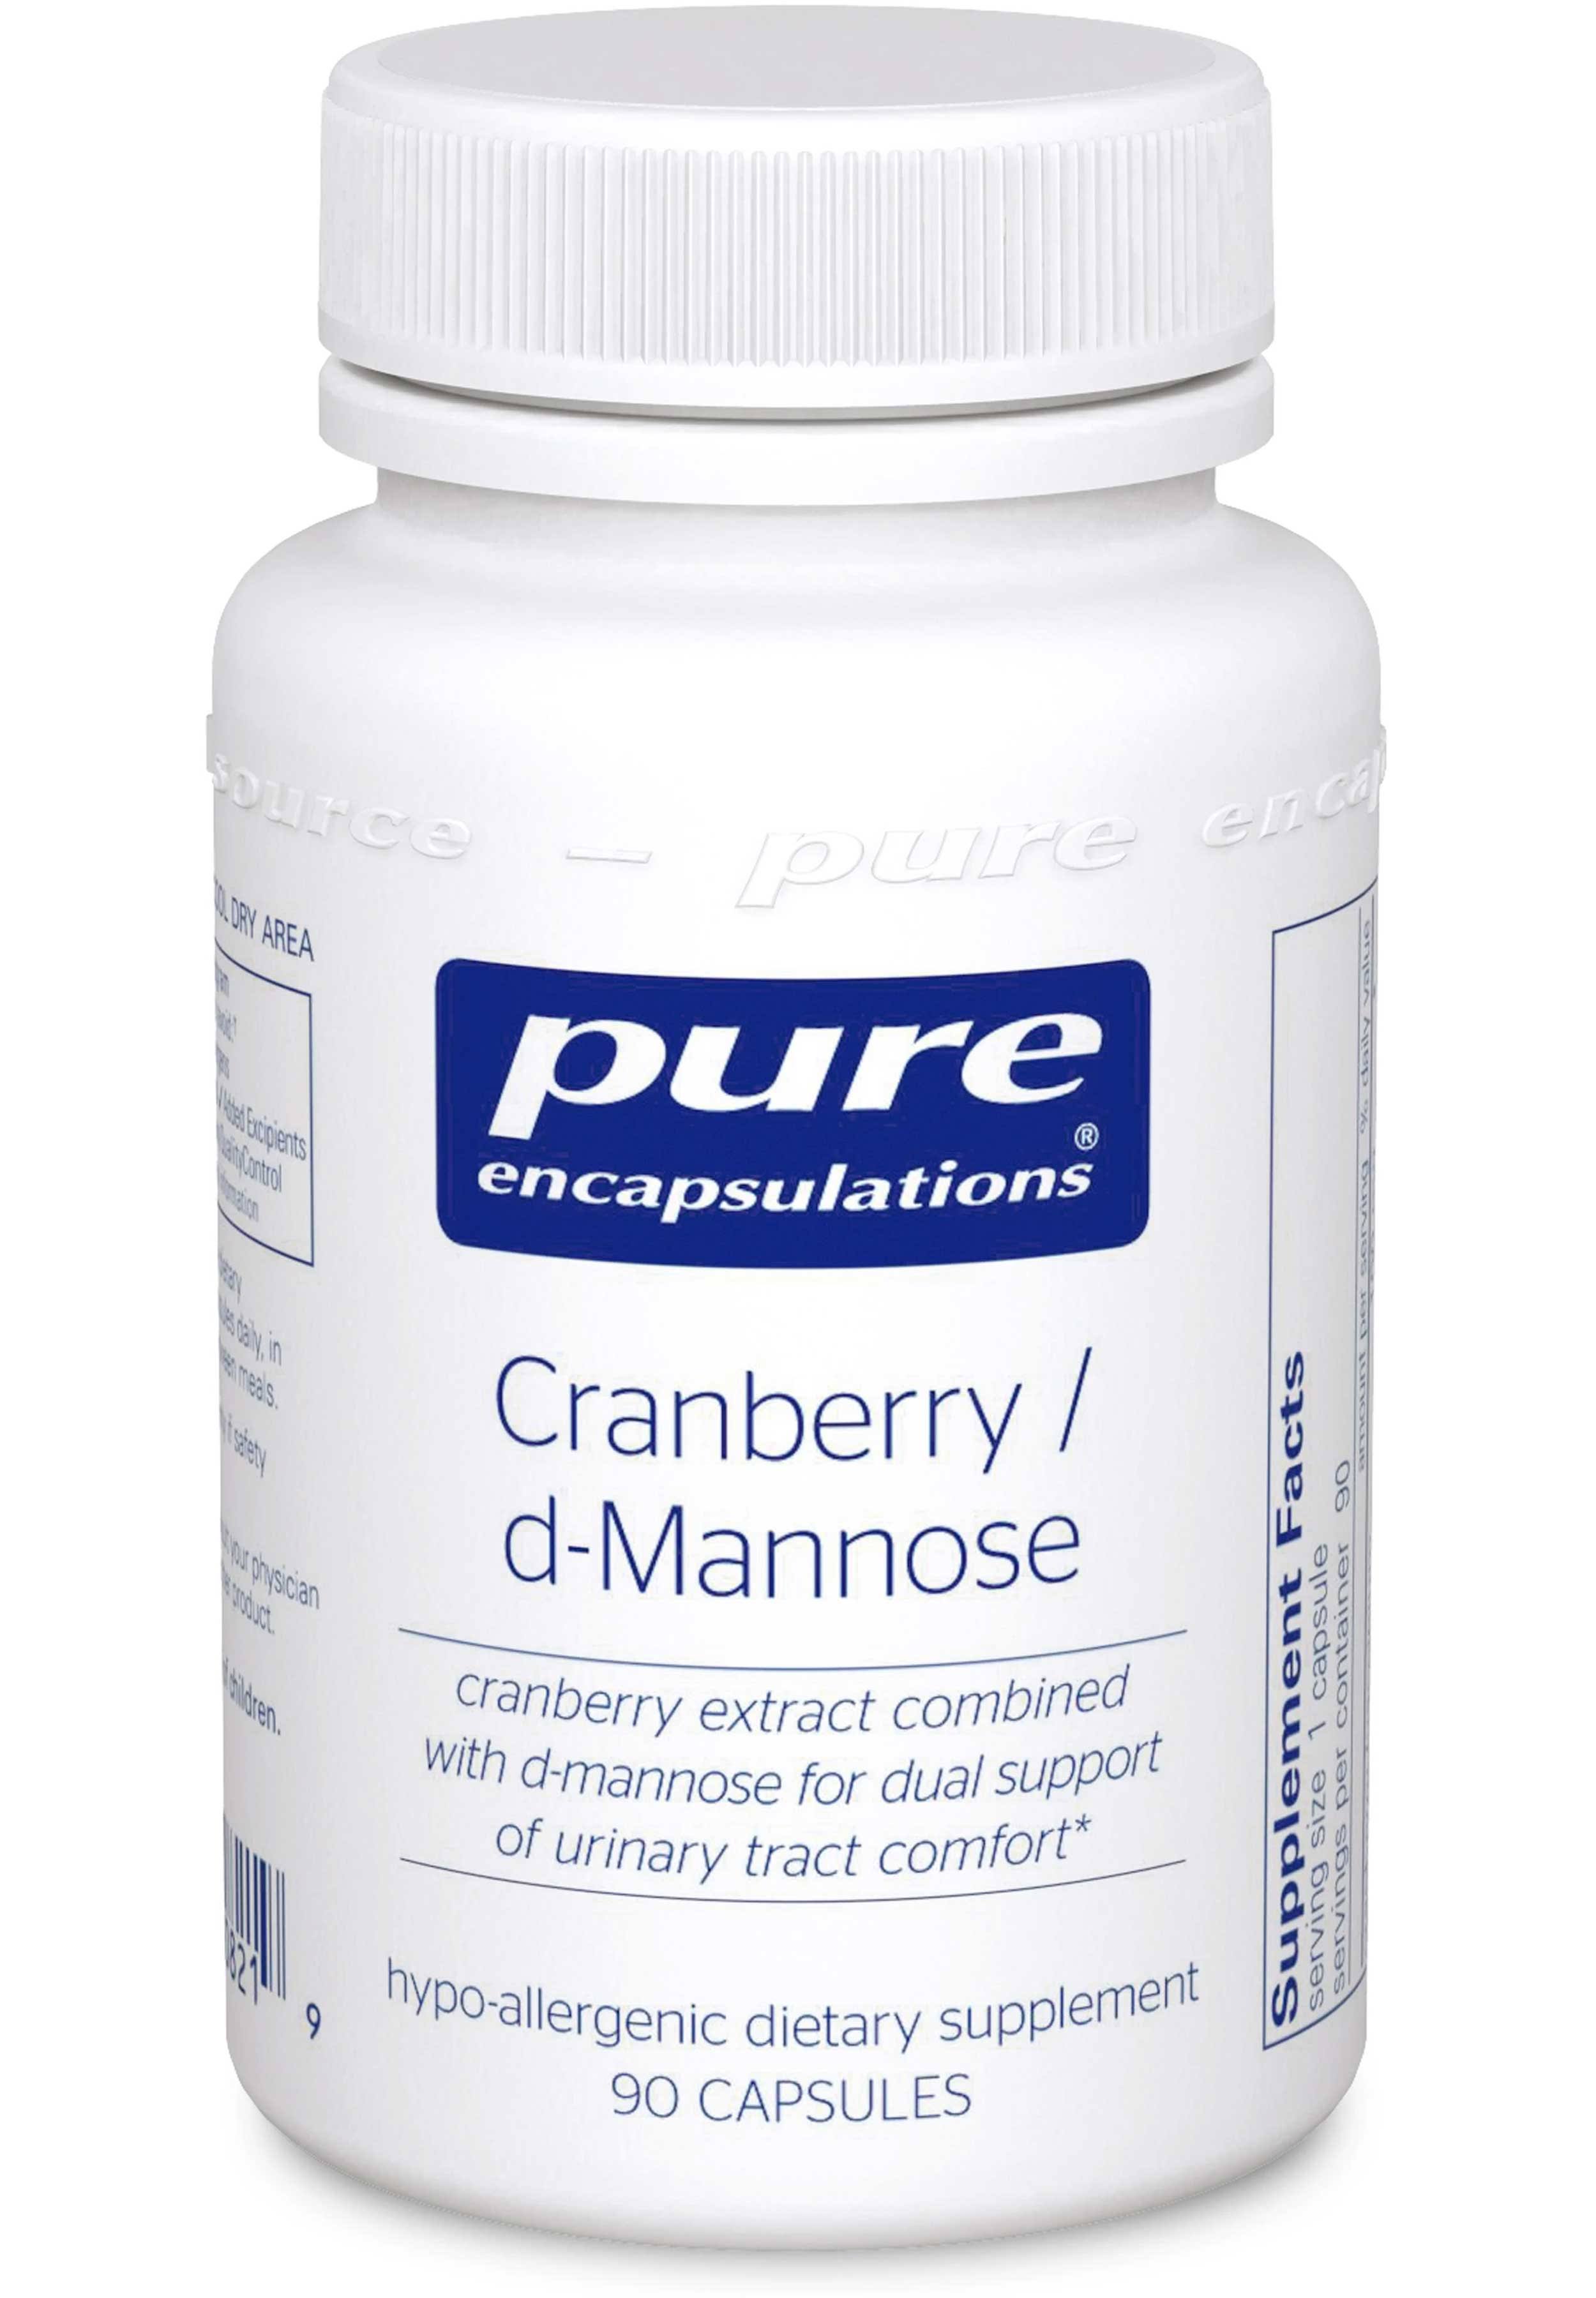 Pure Encapsulations Cranberry/D-Mannose Supplement - 90 Capsules